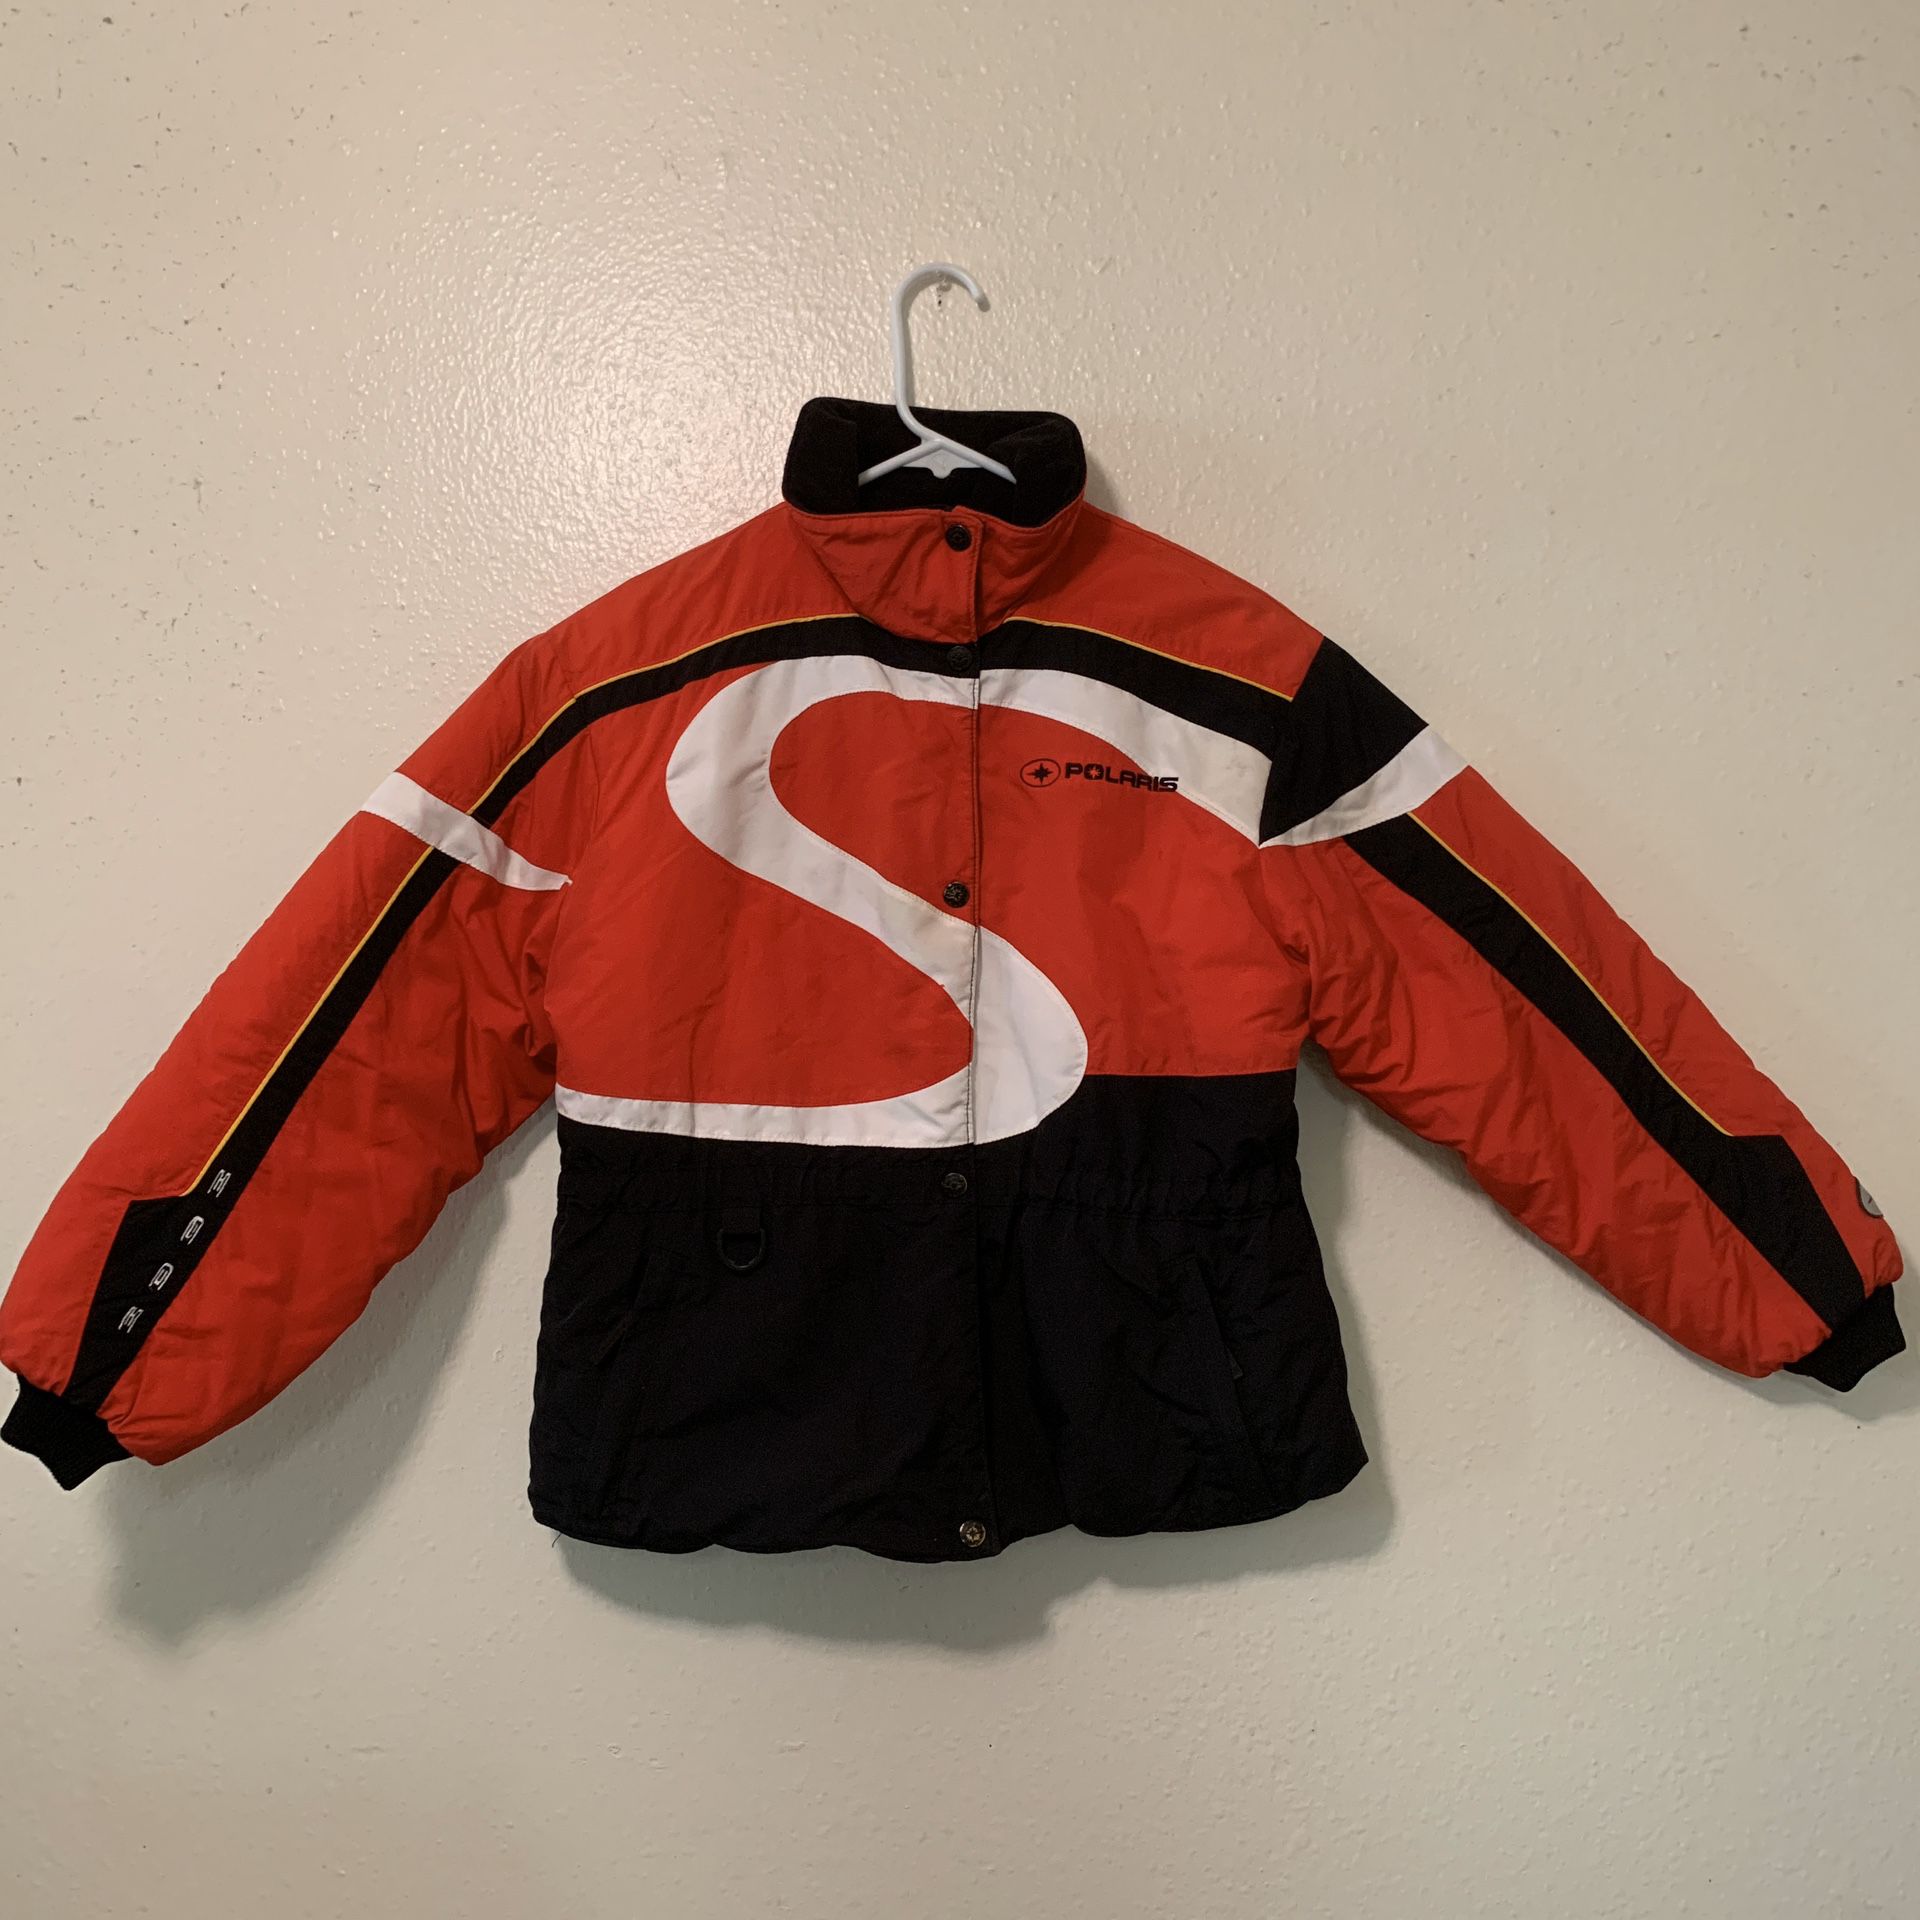 Vintage Polaris Edge Snowmobile Winter Jacket Coat Youth 14 Red Black Warm Gift